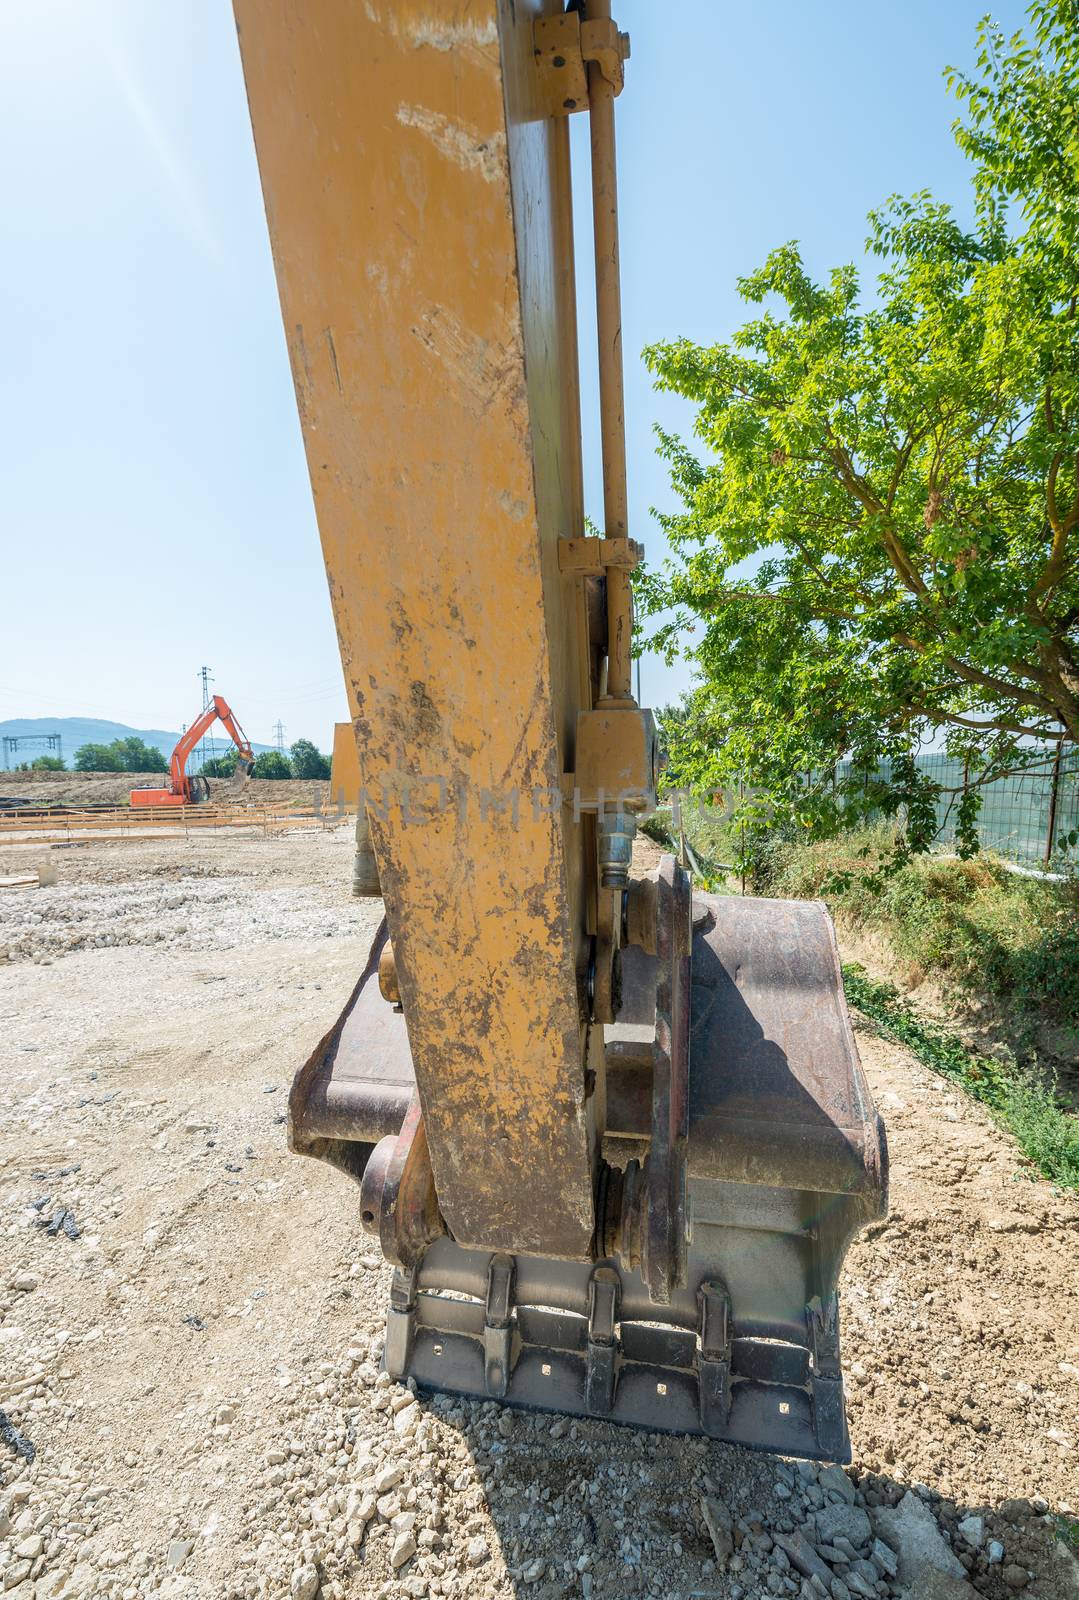 Excavator on construction site by jovannig